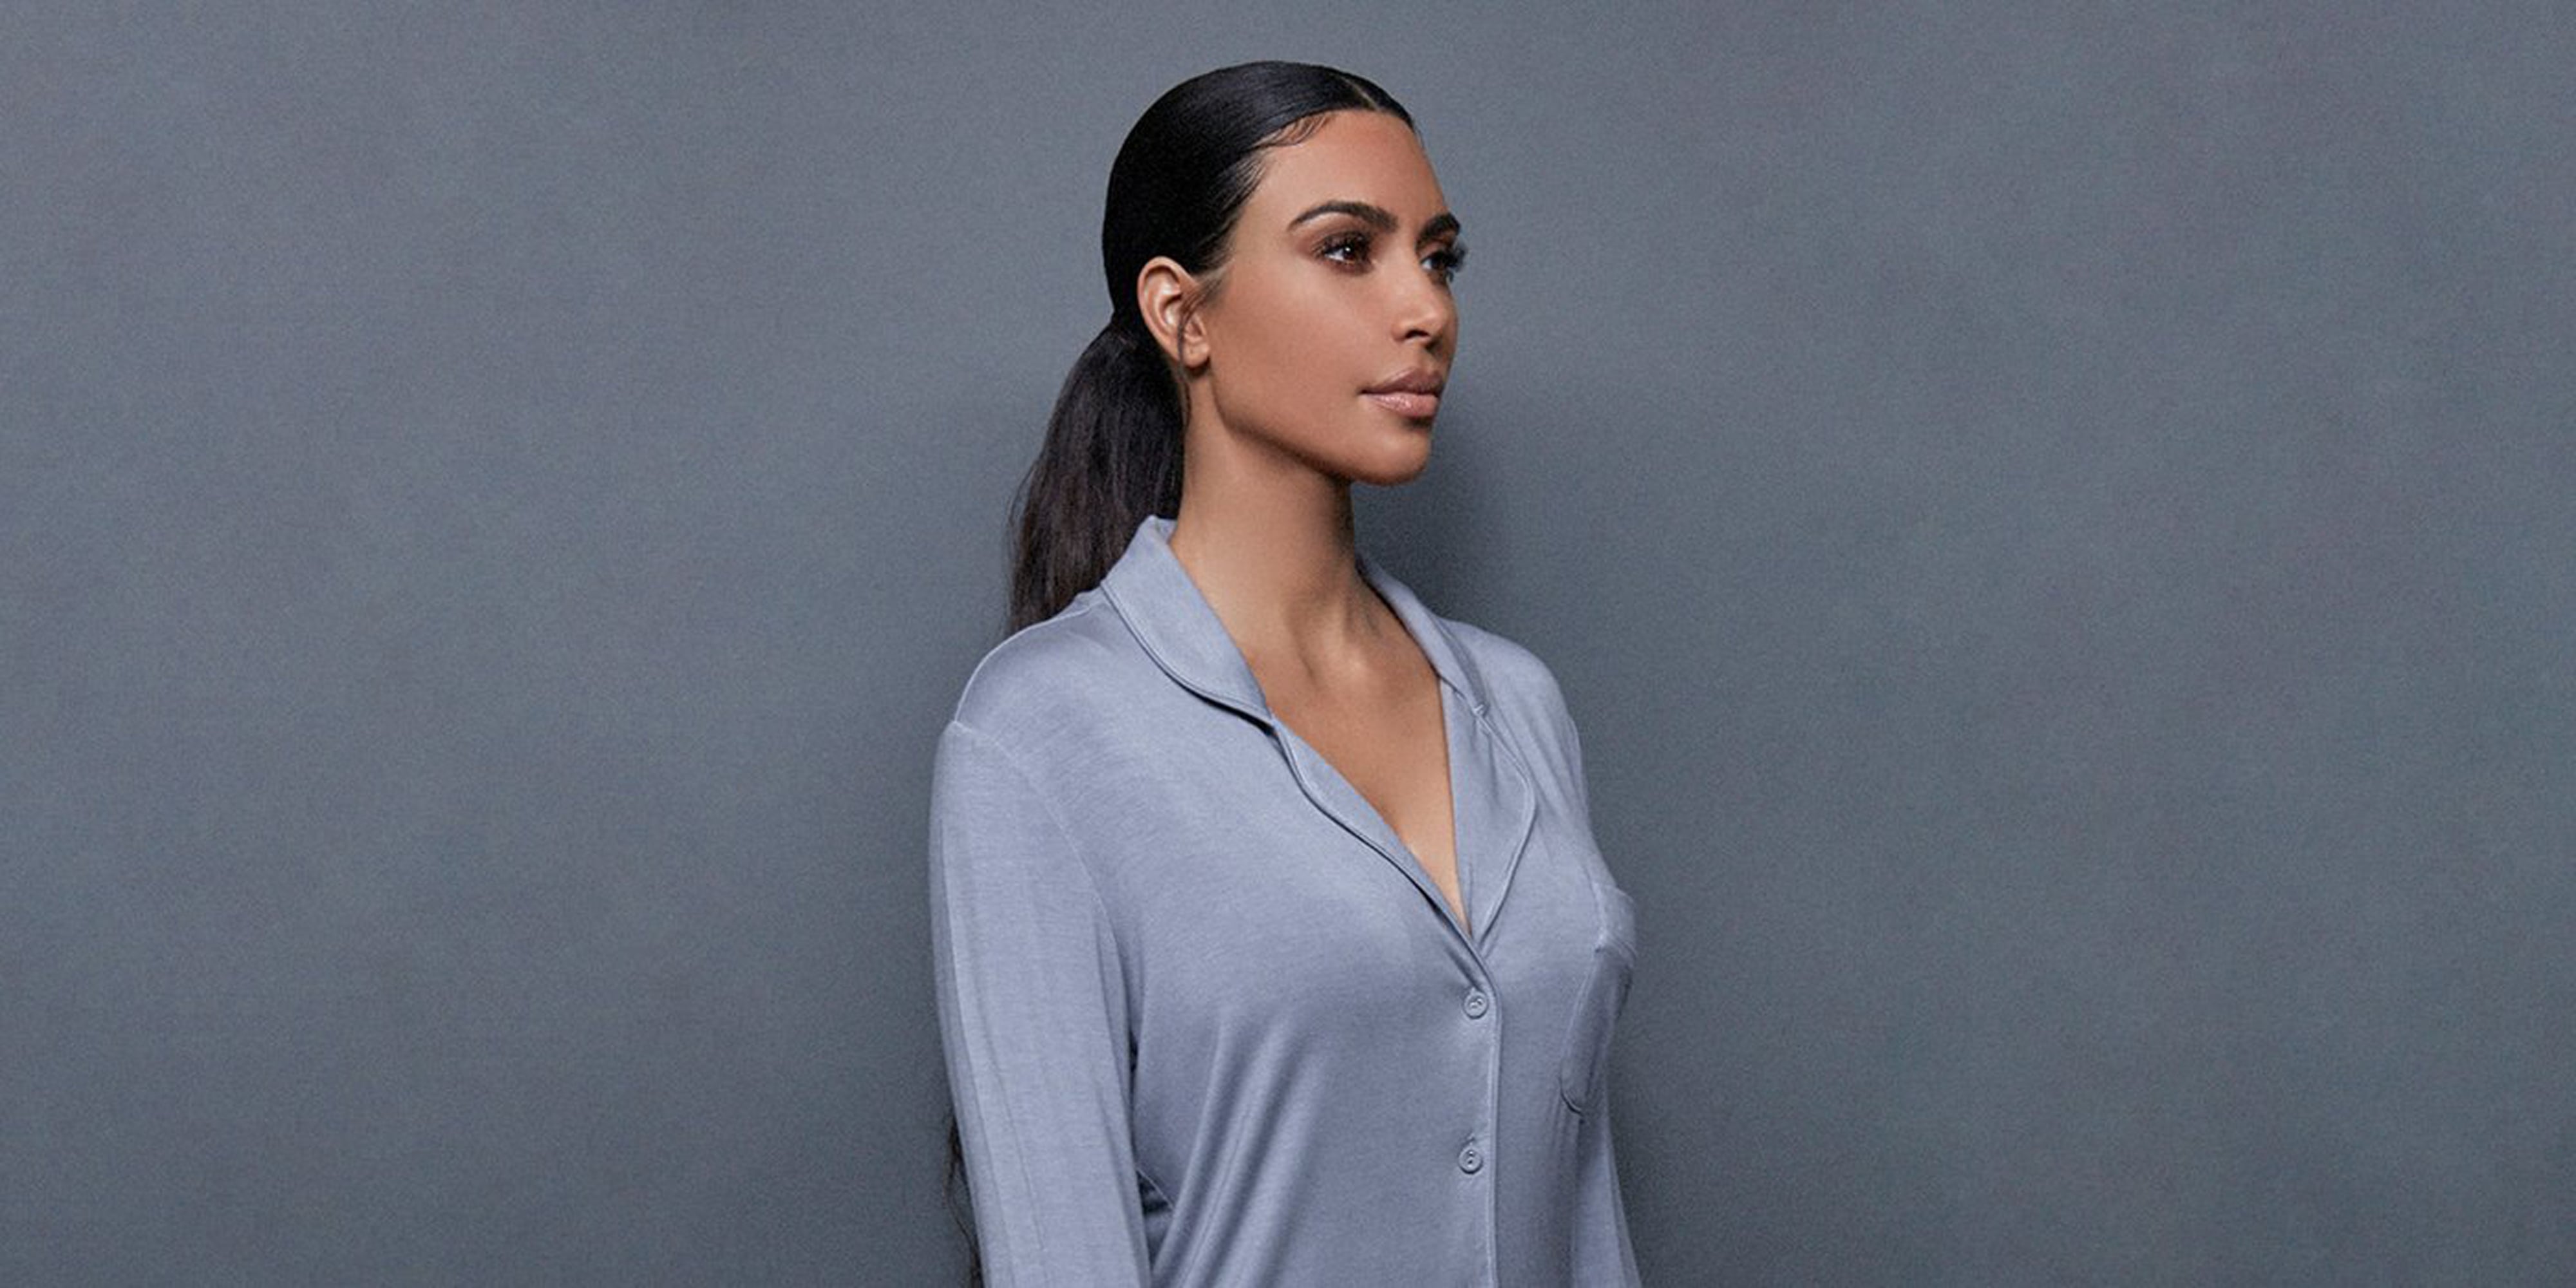 Kim Kardashian's SKIMS is launching a new sleepwear range this week